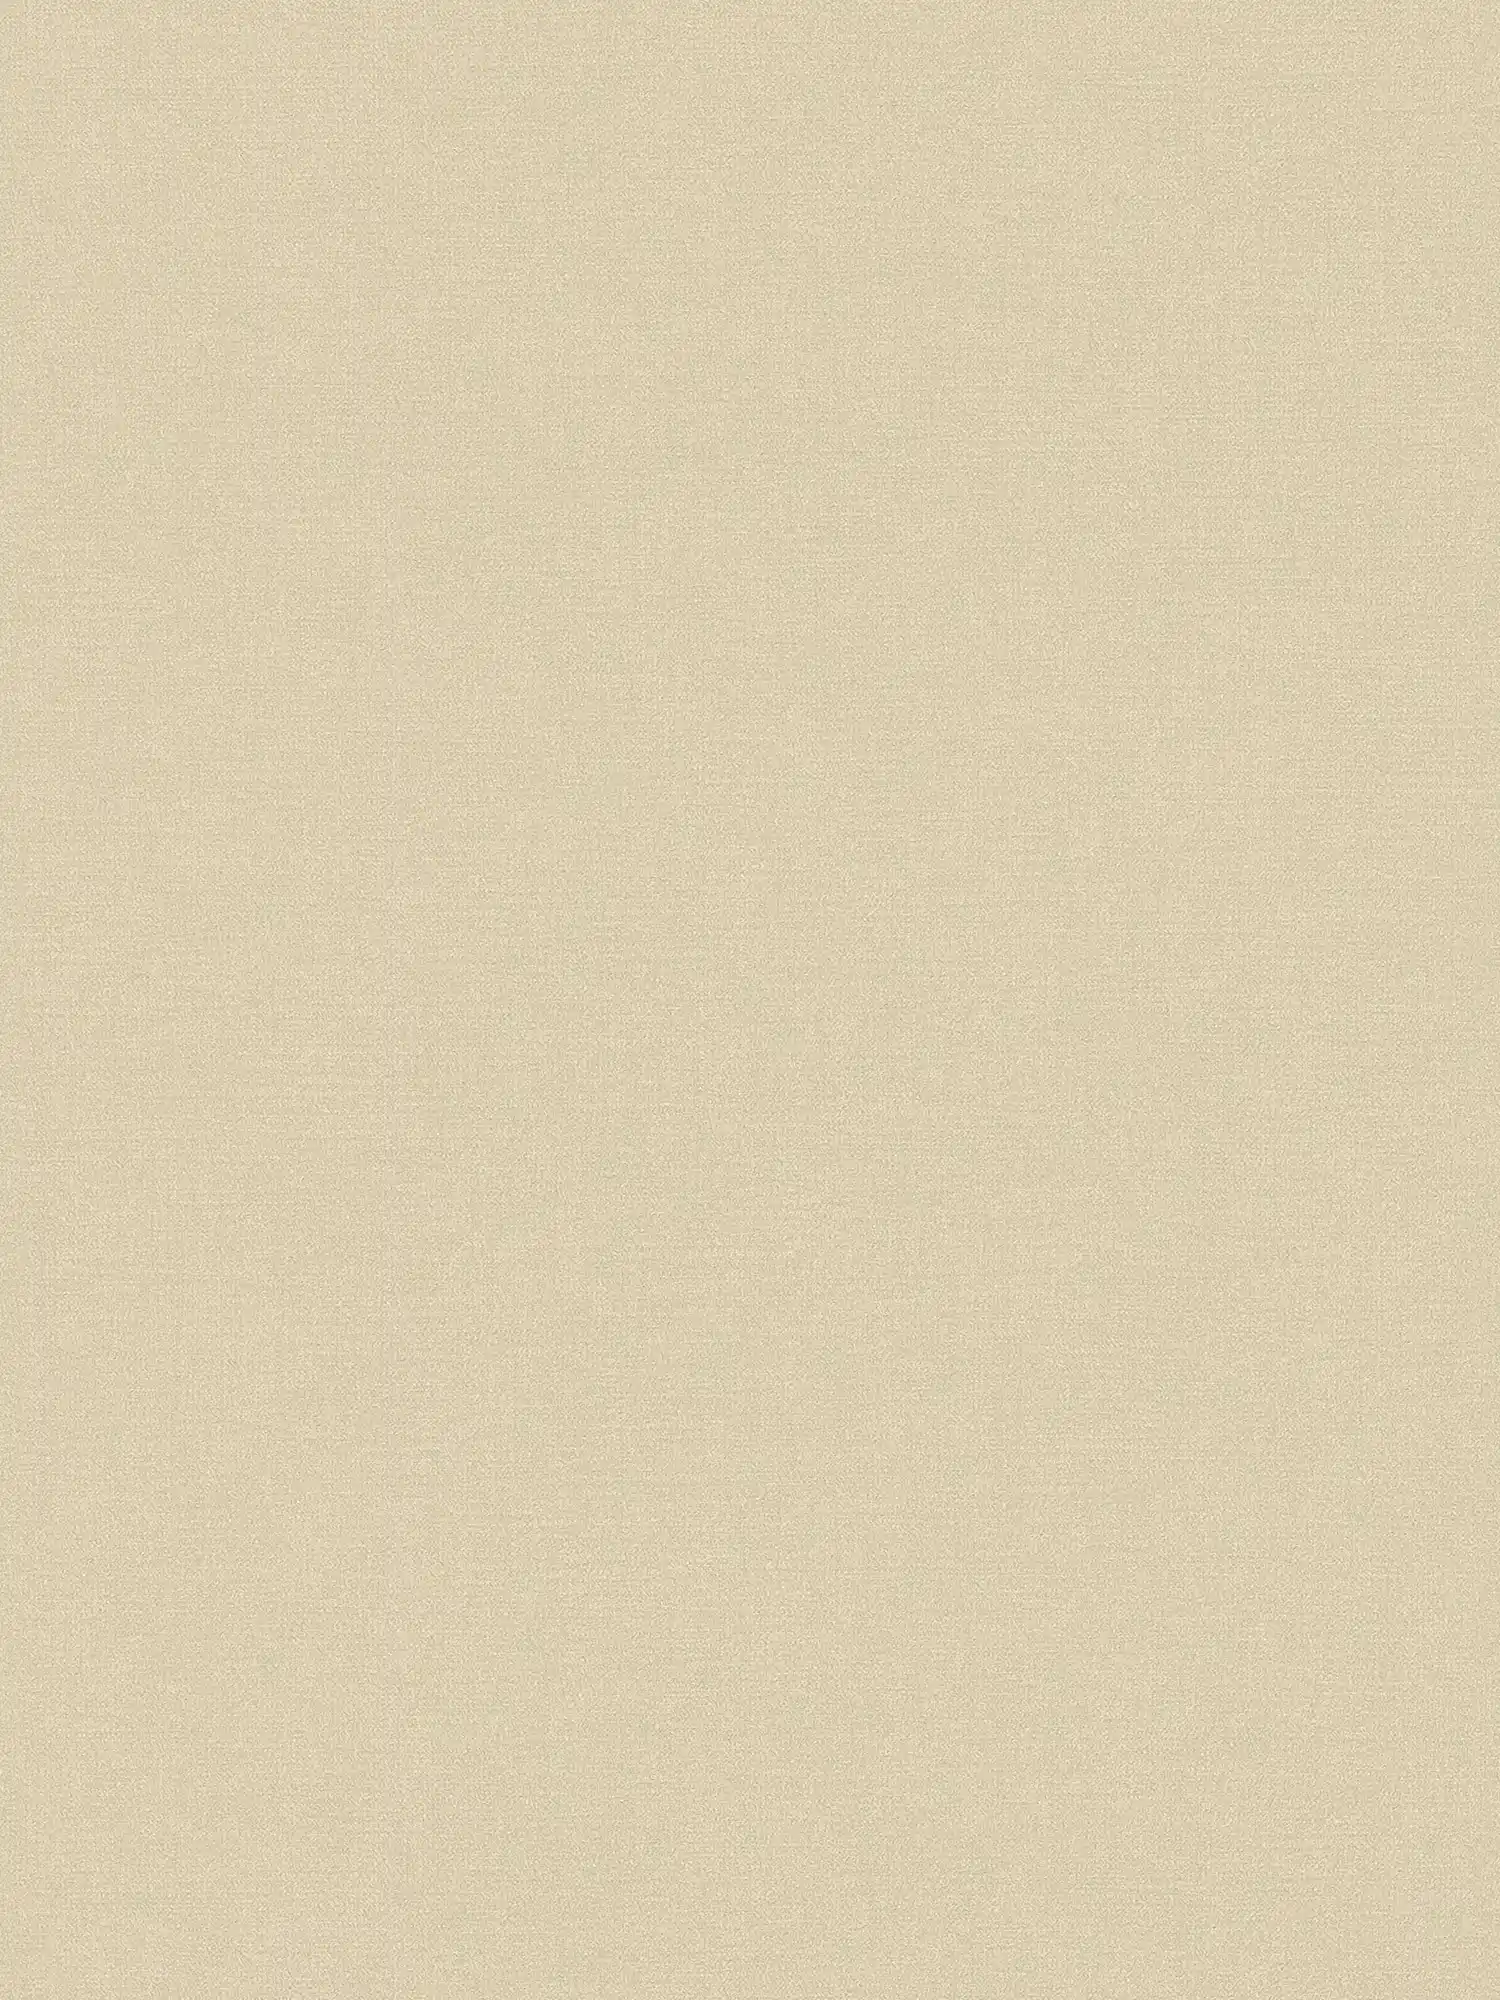 Lightly textured plain wallpaper in a warm shade - beige
